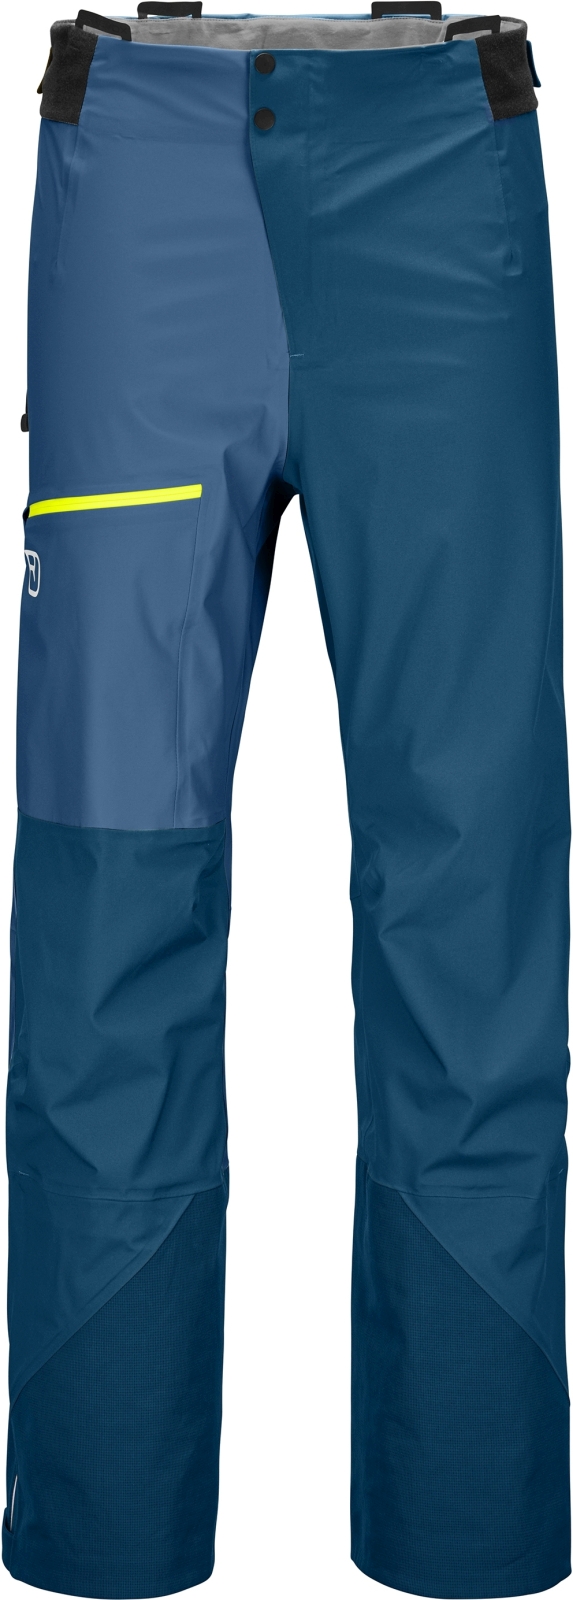 E-shop Ortovox 3l ortler pants m - petrol blue XXL